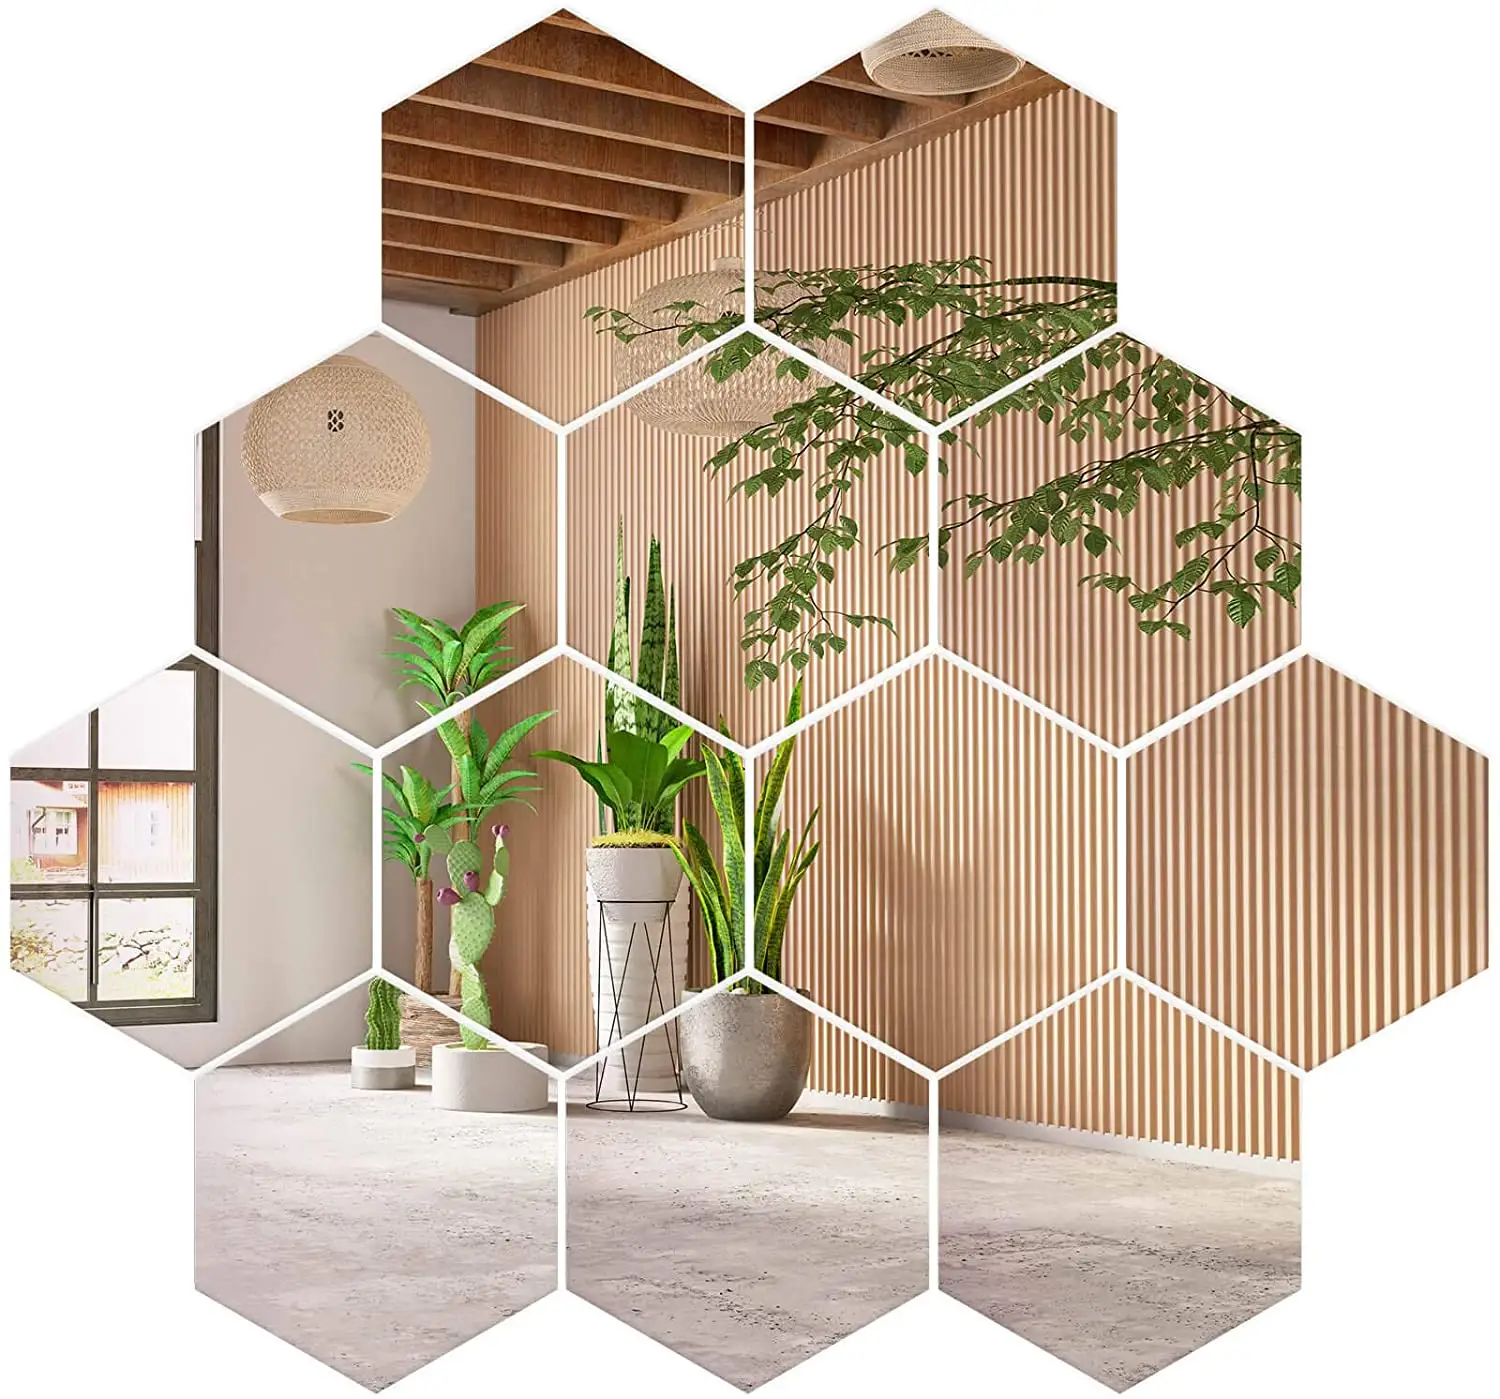 12PCS Mirror Wall Stickers Hexagon Art Acrylic Removable Wall Sticker DIY Home Decor